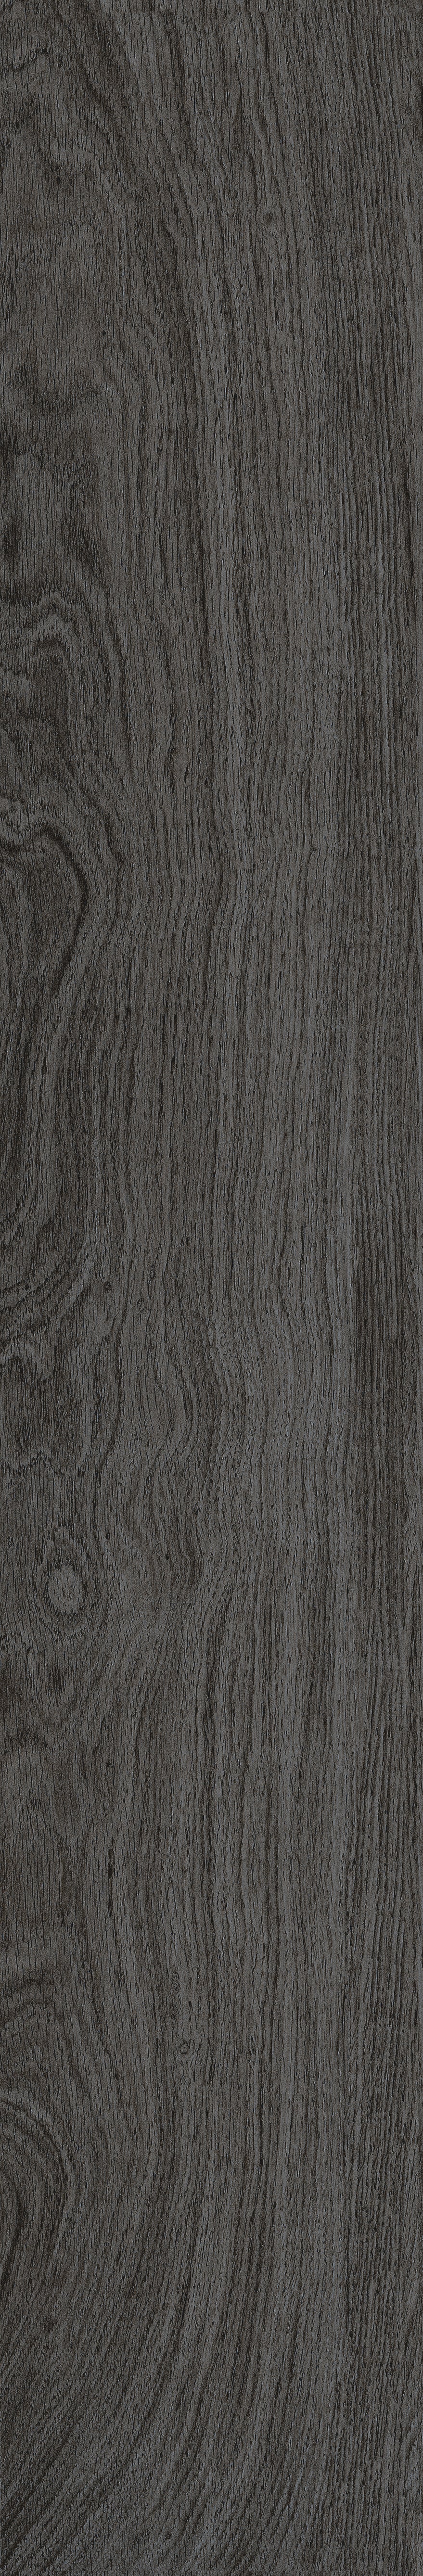 Giania 木紋磚 Bm122505m